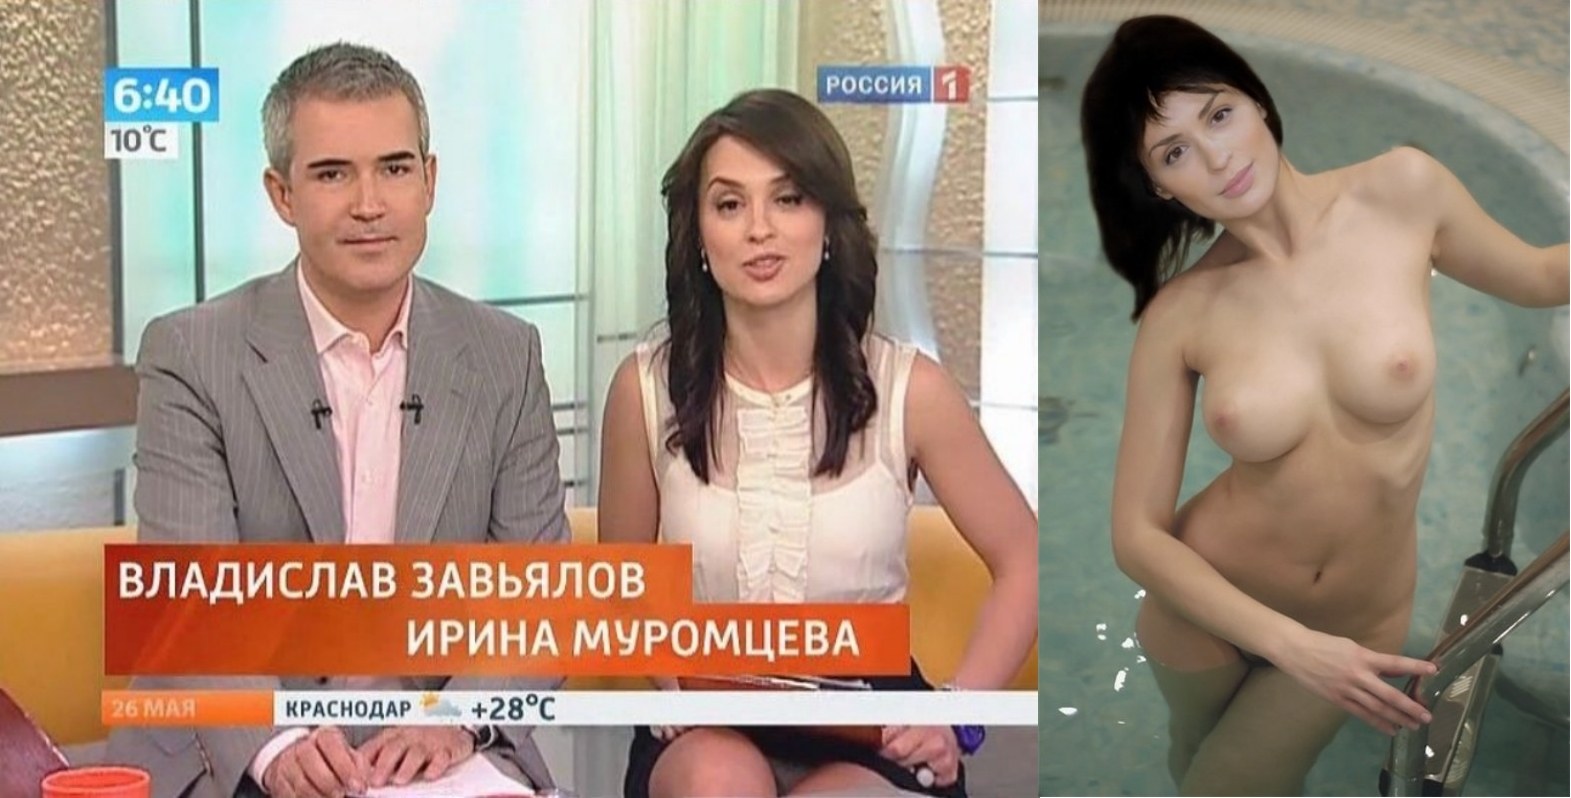 телеканалы российские эротика i фото 39